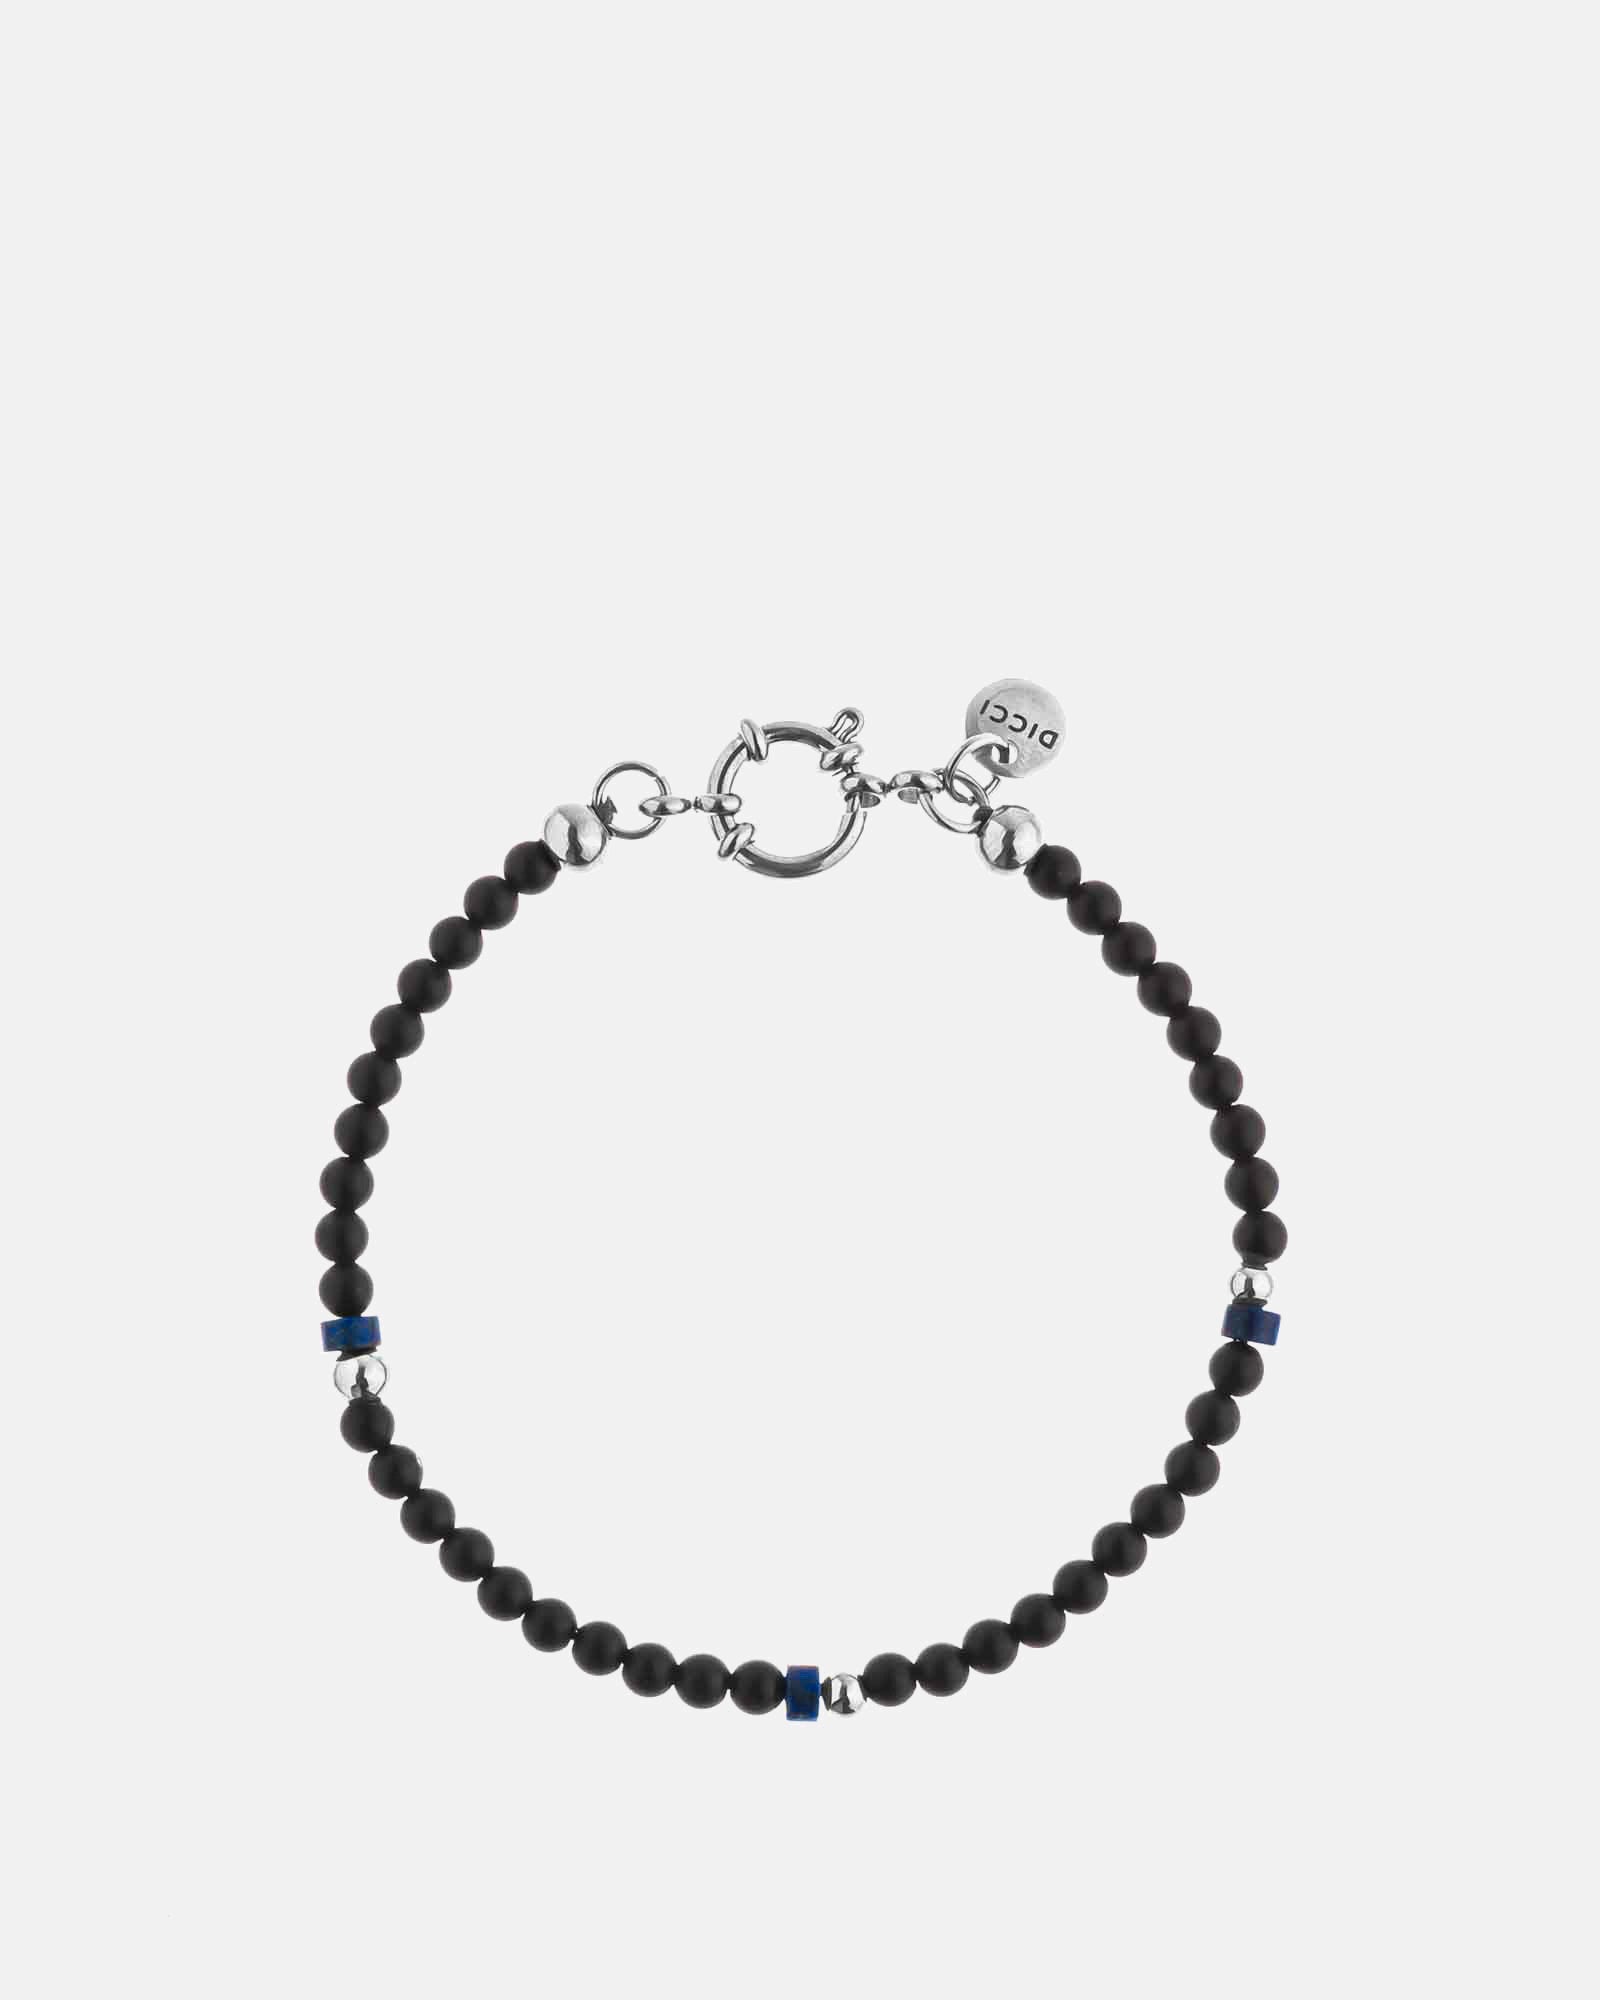 Formosa - Natural Stone Bracelet - black onyx stones and blue lapislazuli stones, with a stainless steel clasp - Online Unissex Jewelry - DICCI